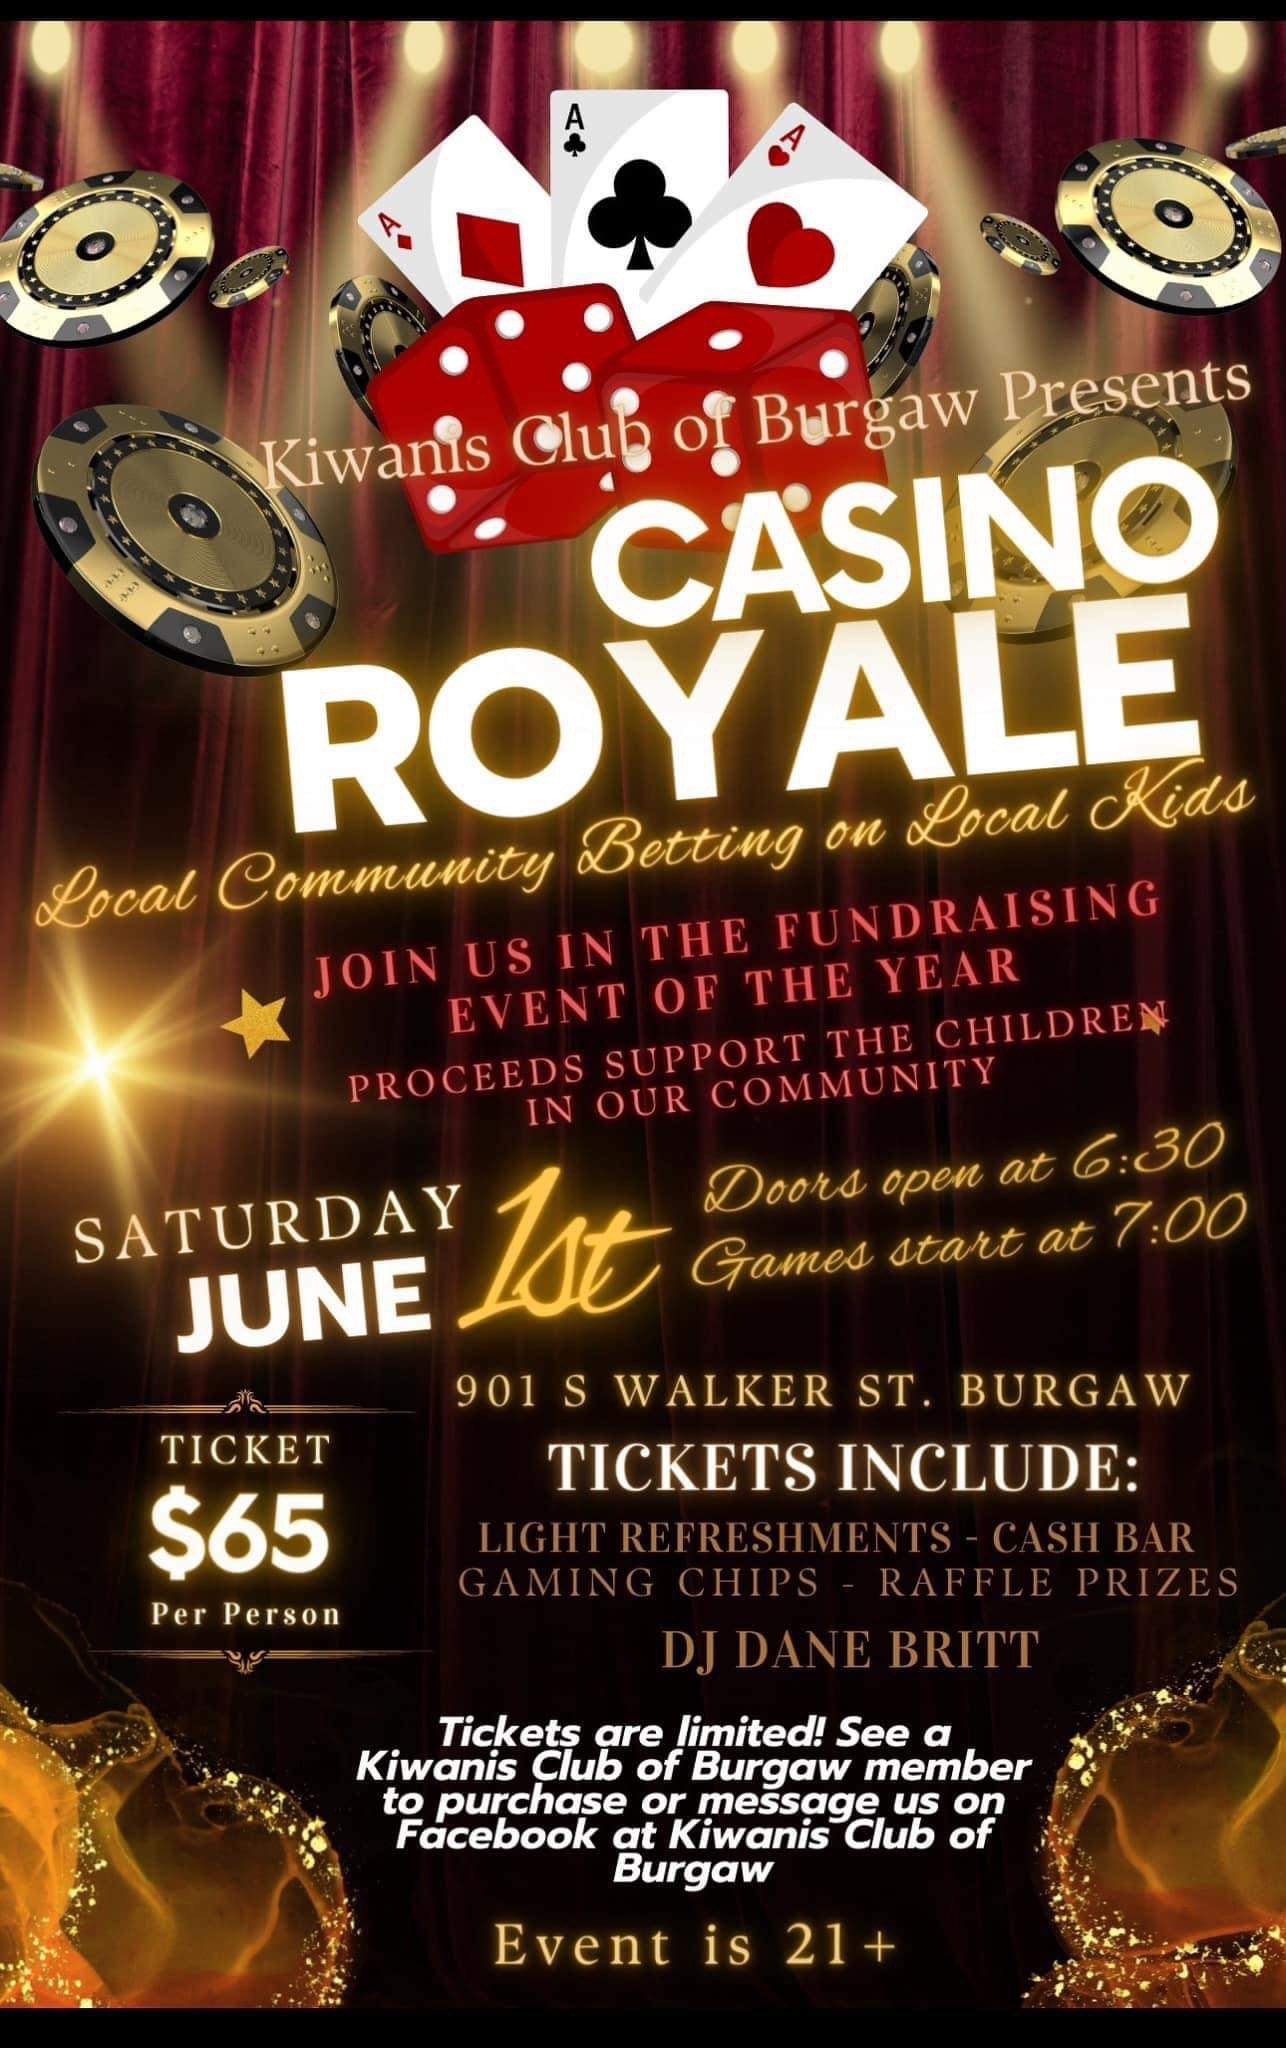 Casino Royal Fundraiser with the Kiwanis Club of Burgaw